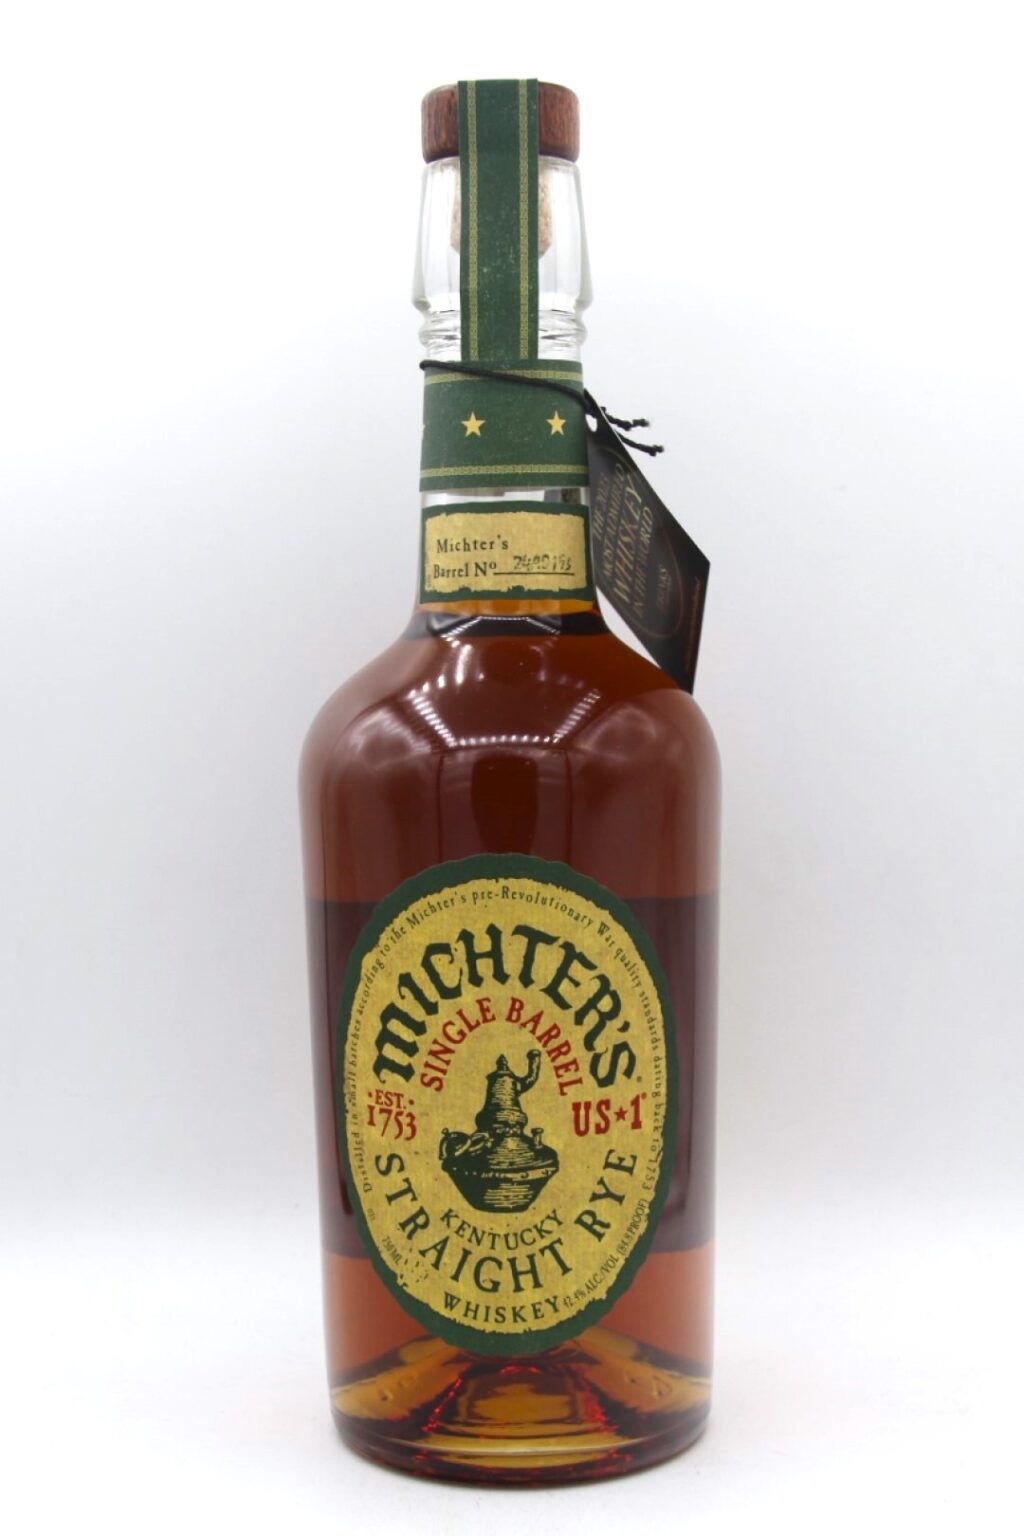 Michter’s US 1 Single Barrel Kentucky Straight Rye Whiskey